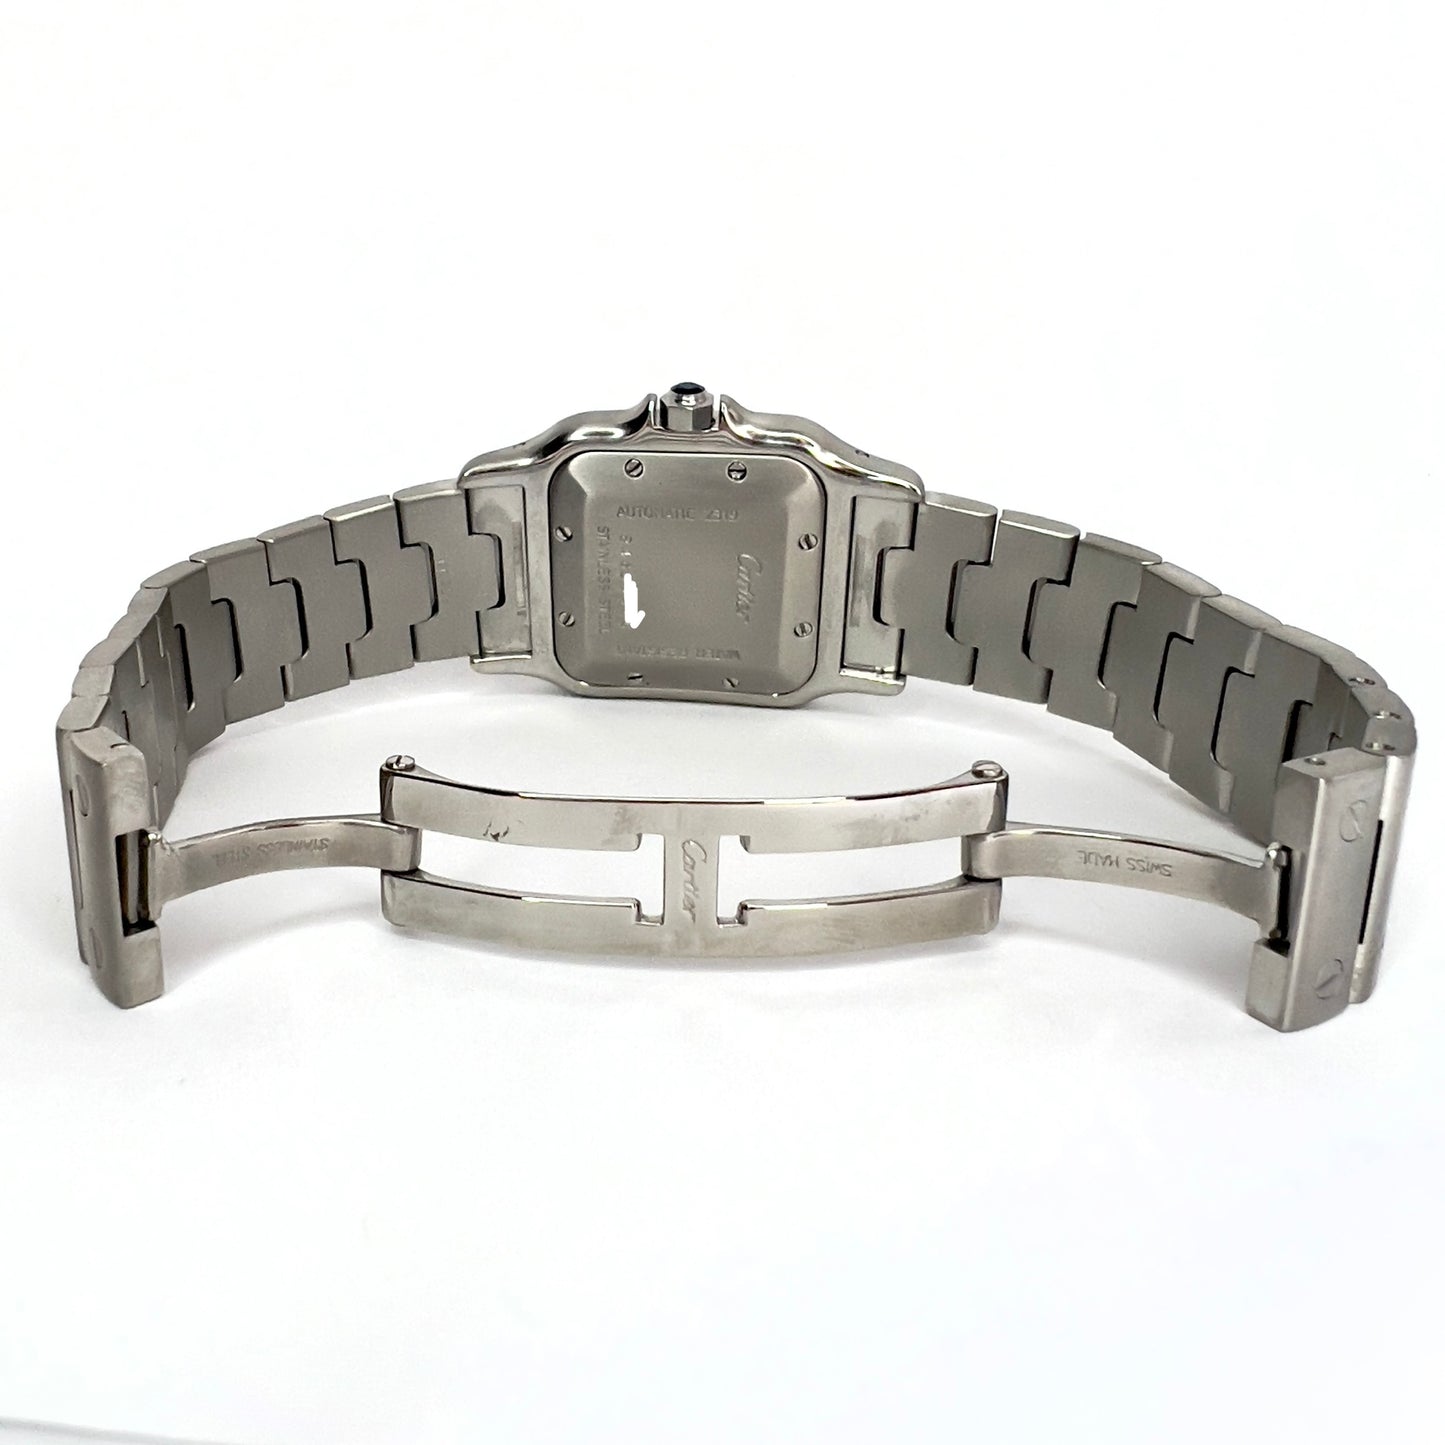 CARTIER SANTOS GALBEE 29mm Automatic Steel 0.85TCW Diamond Watch